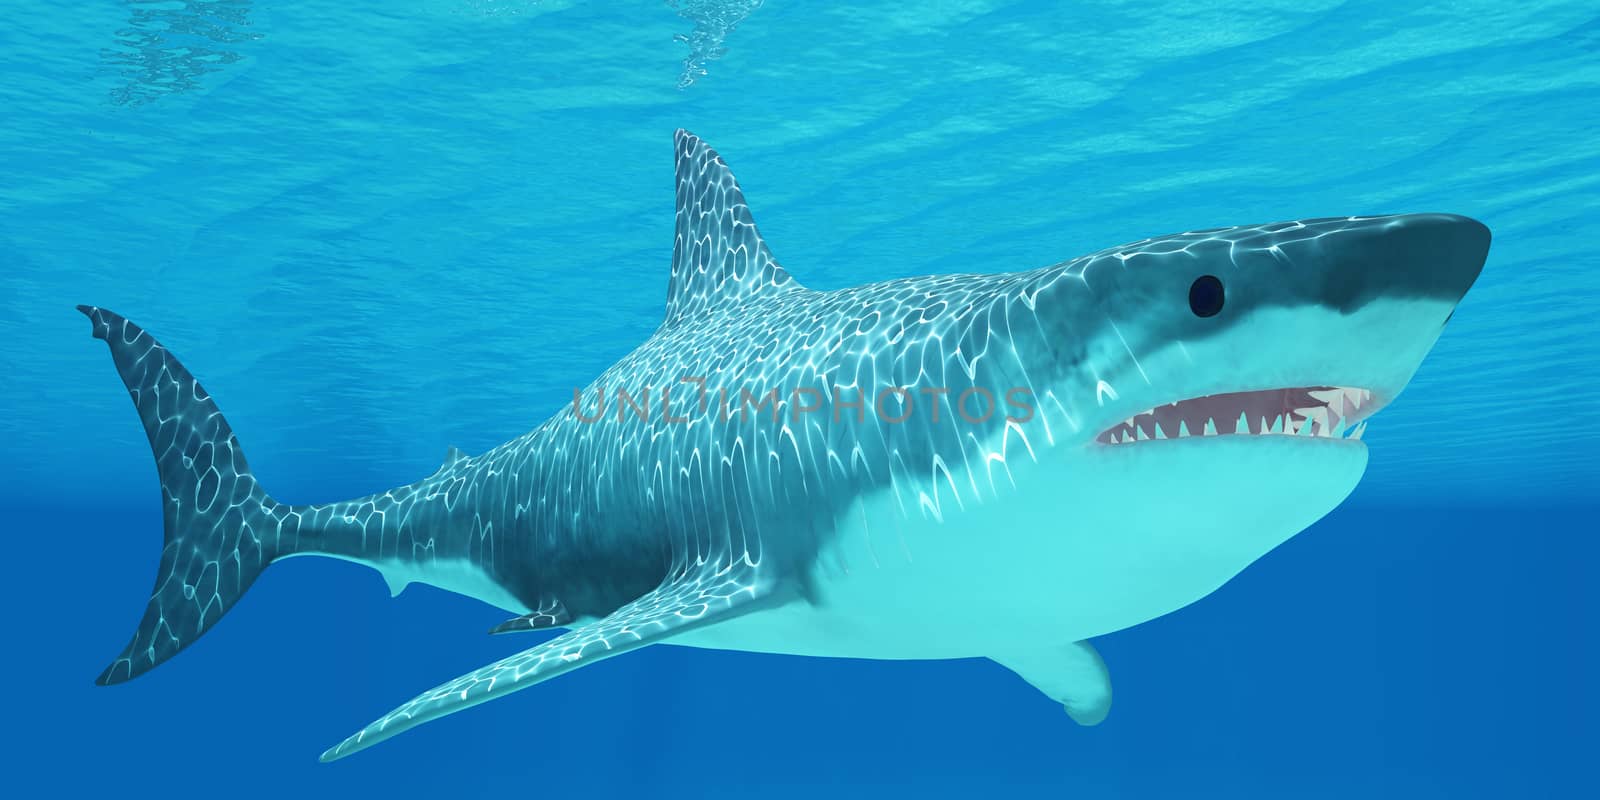 Great White Shark Undersea by Catmando